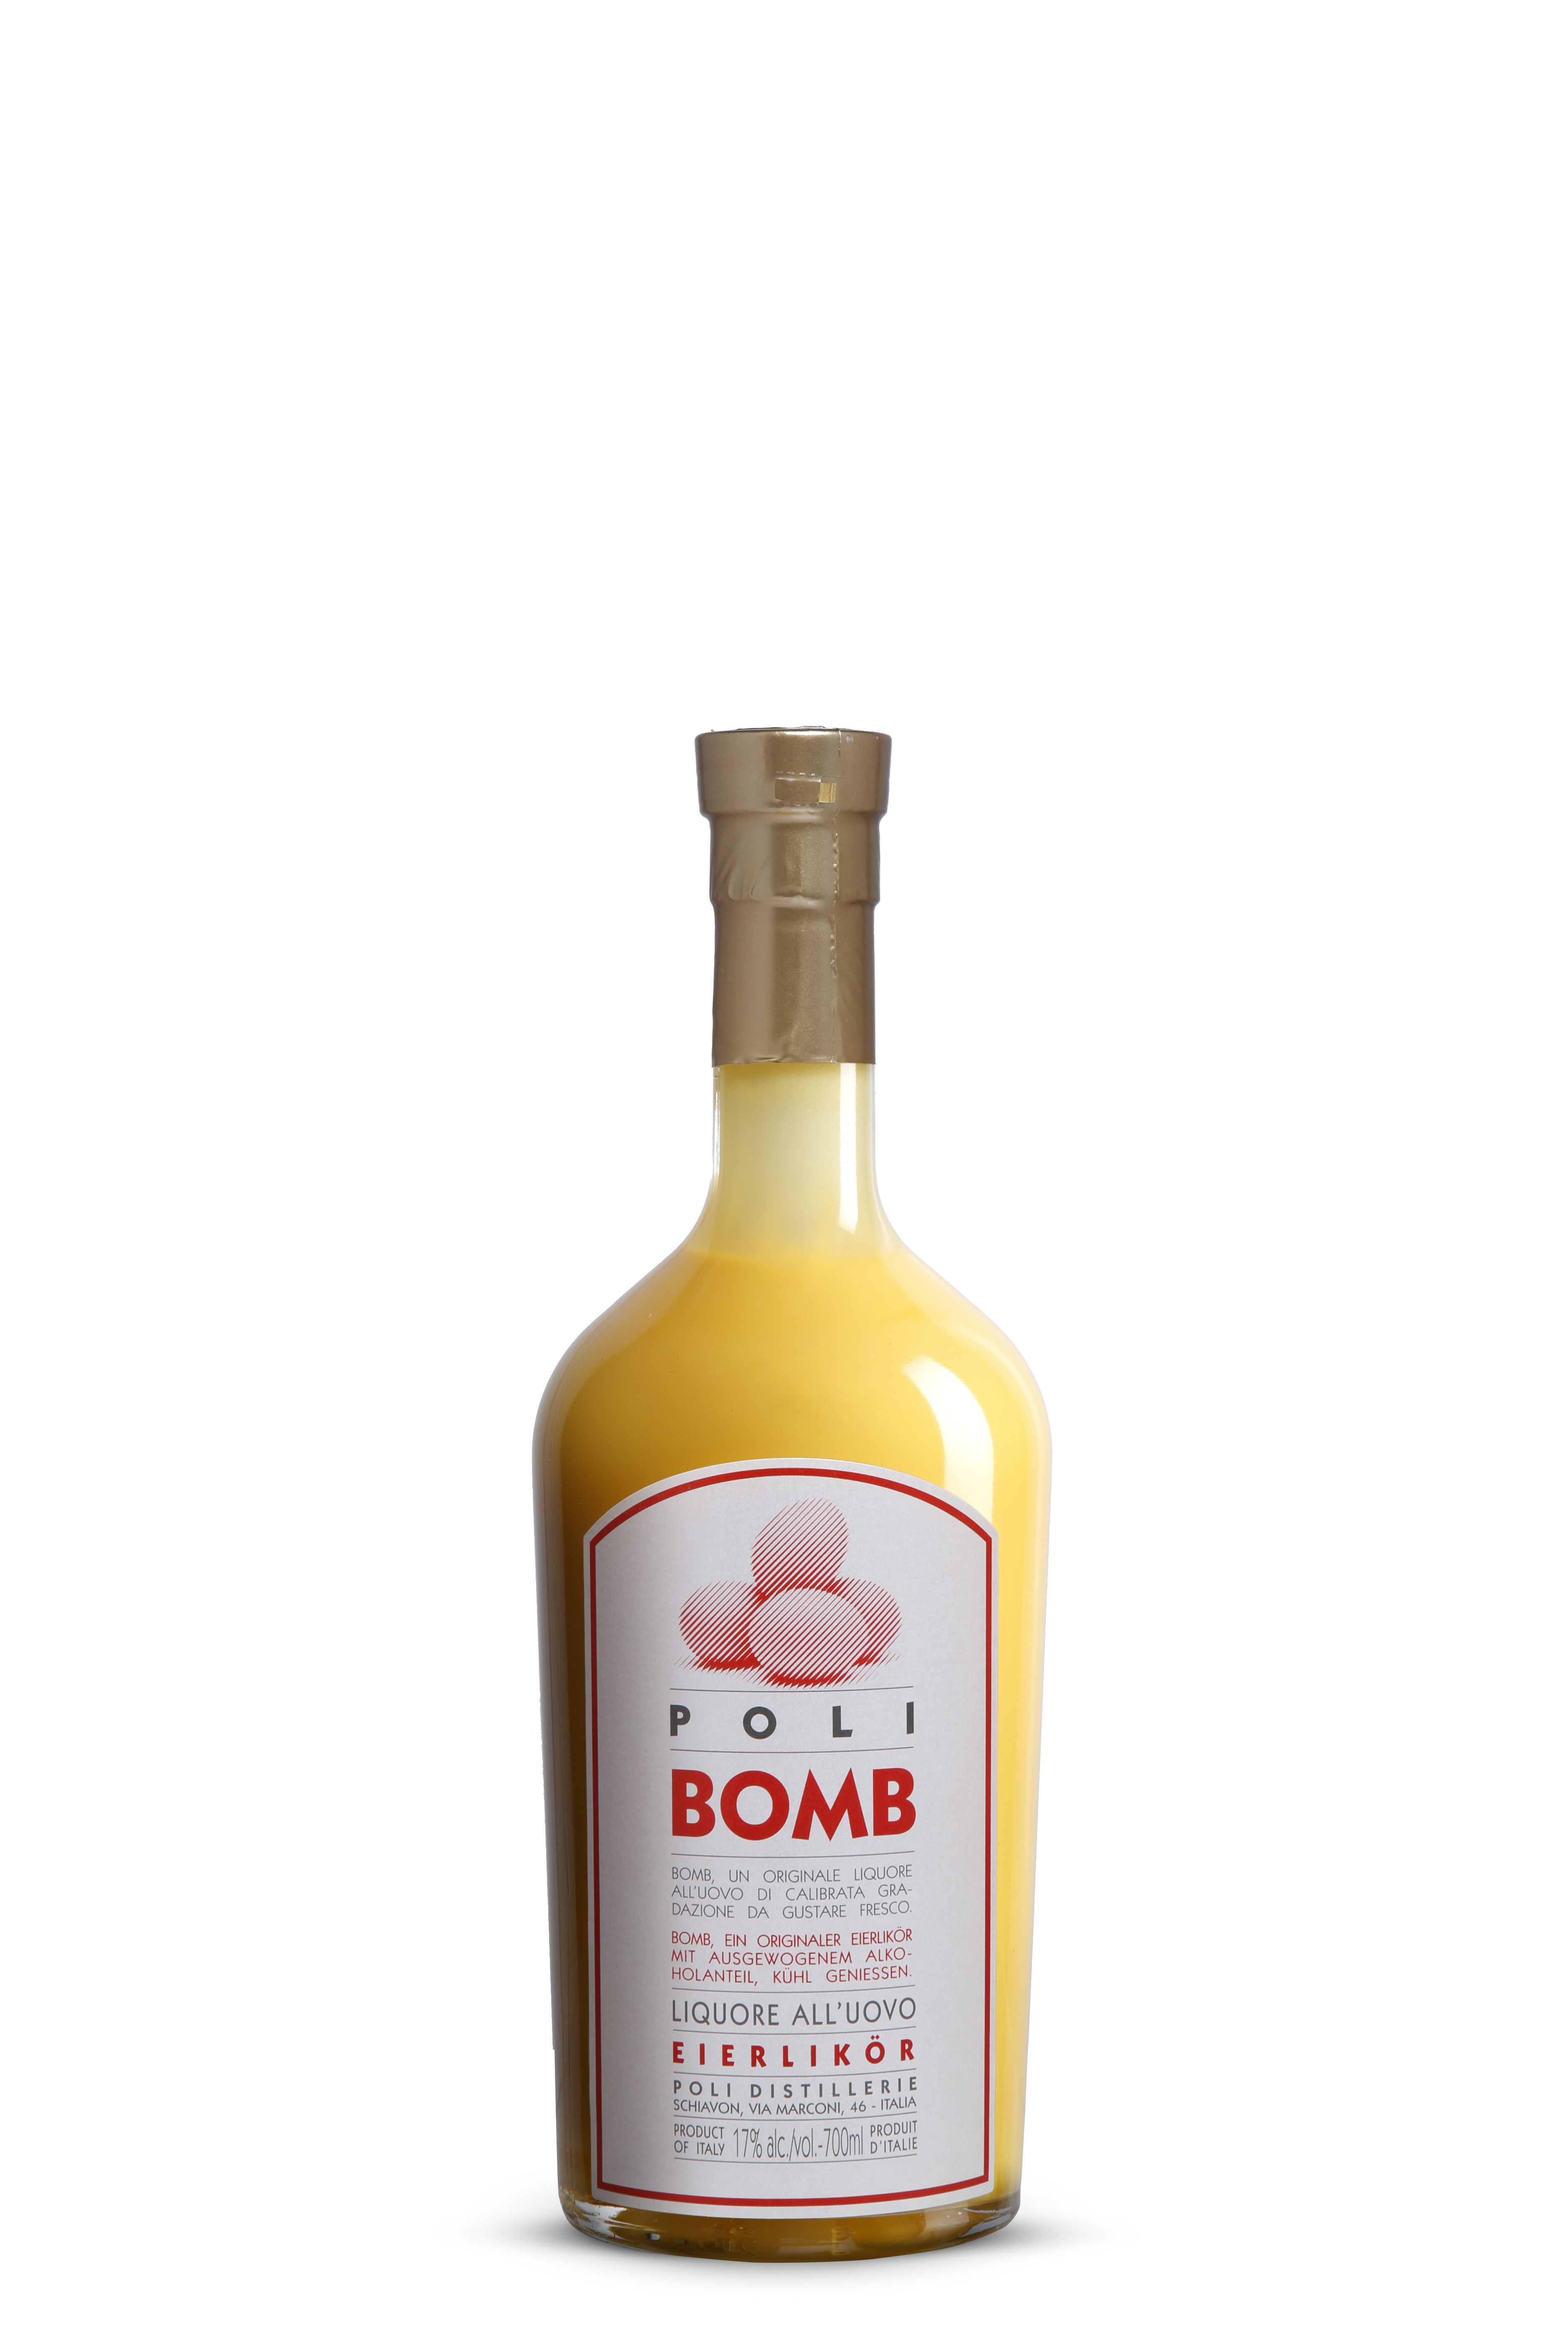 Poli Bomb Liquore all' Uovo